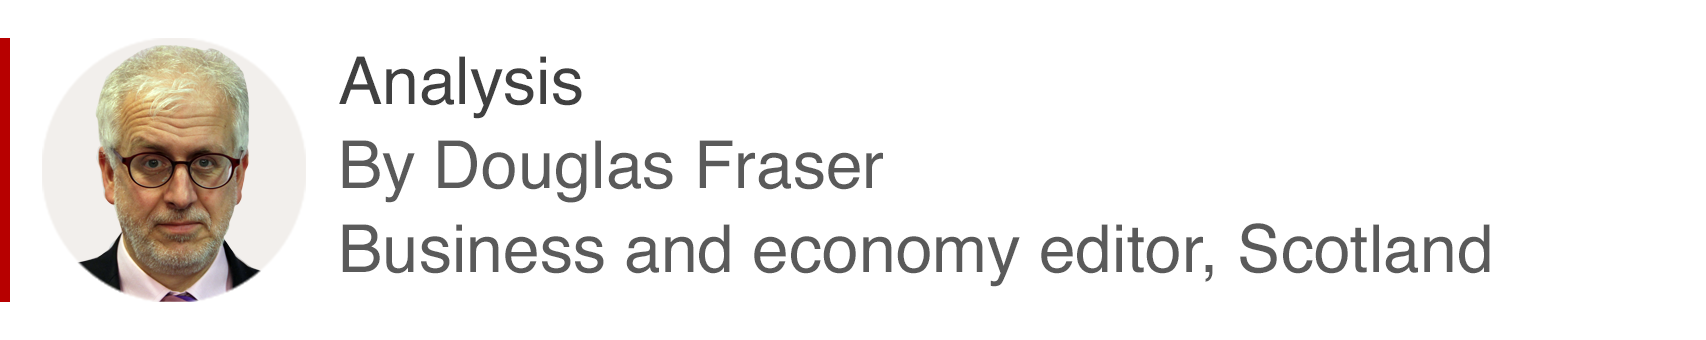 Analysis box by Douglas Fraser, business and economy editor, Scotland